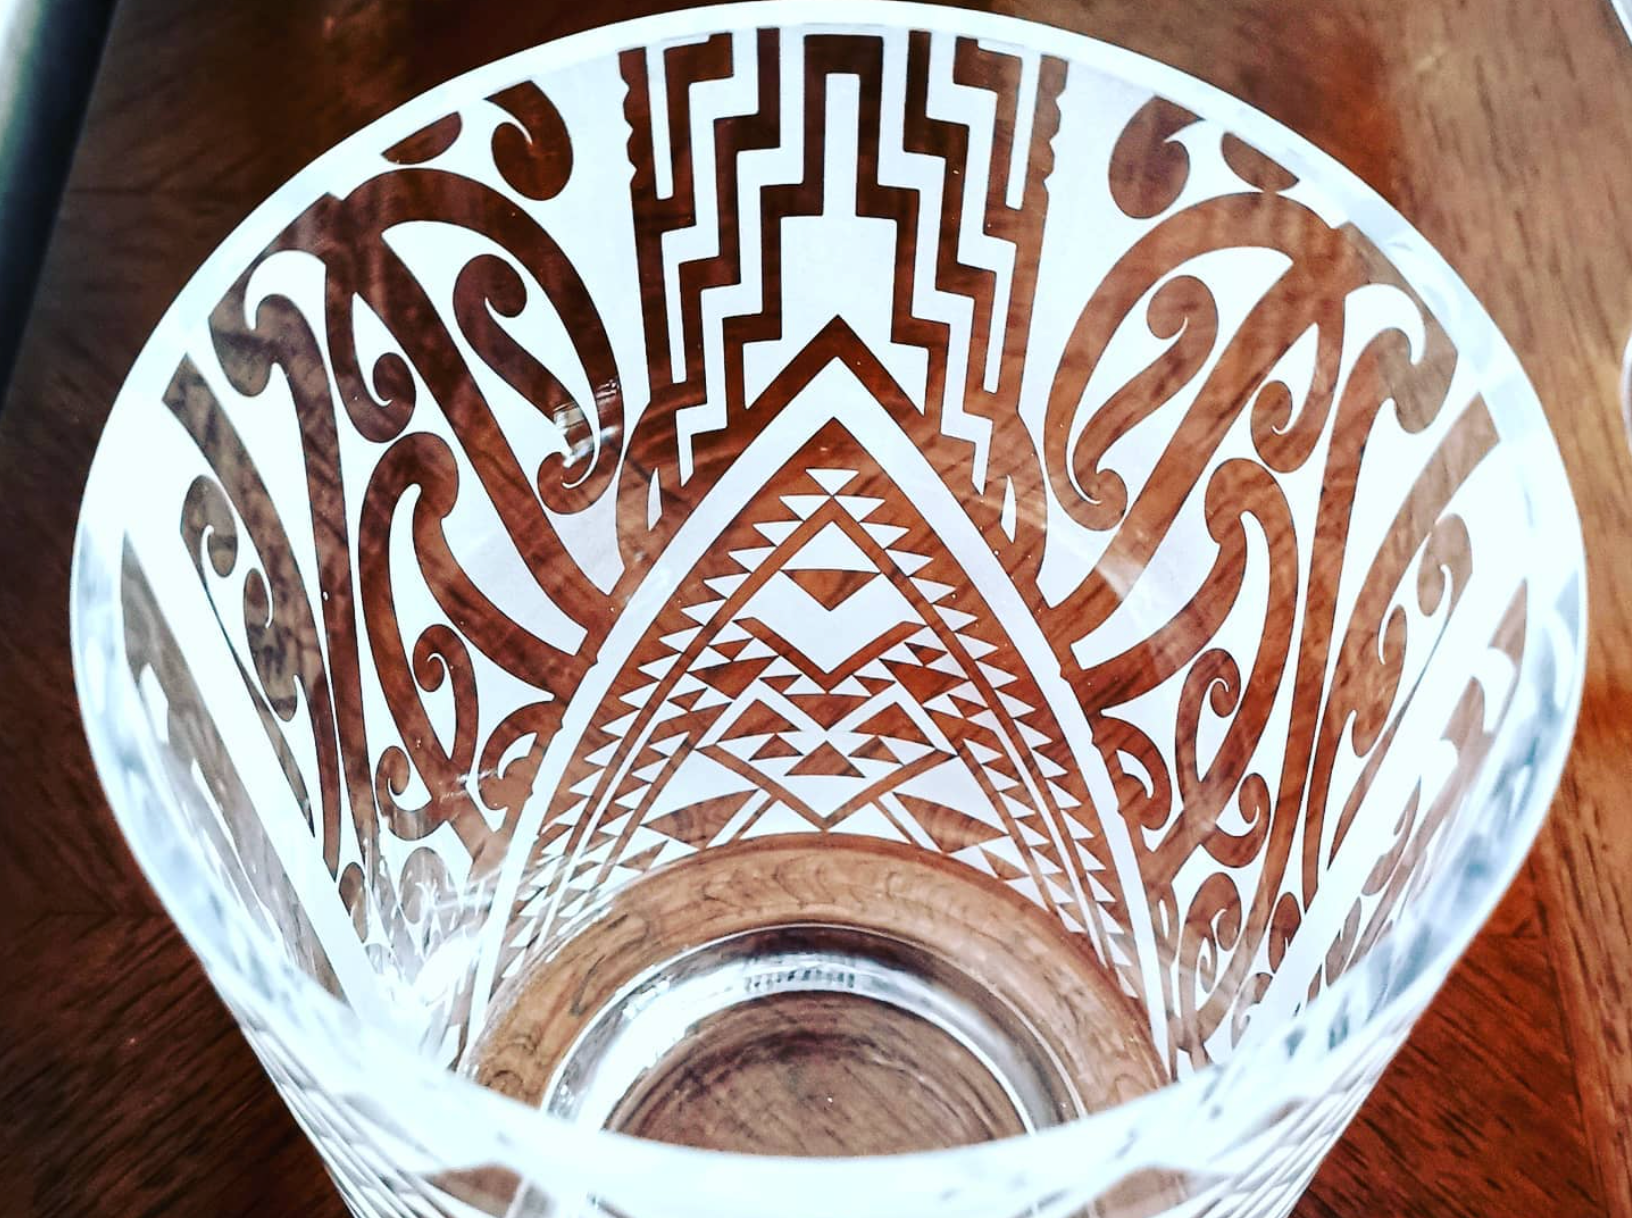 sandblasted glass flower vase with intricate design